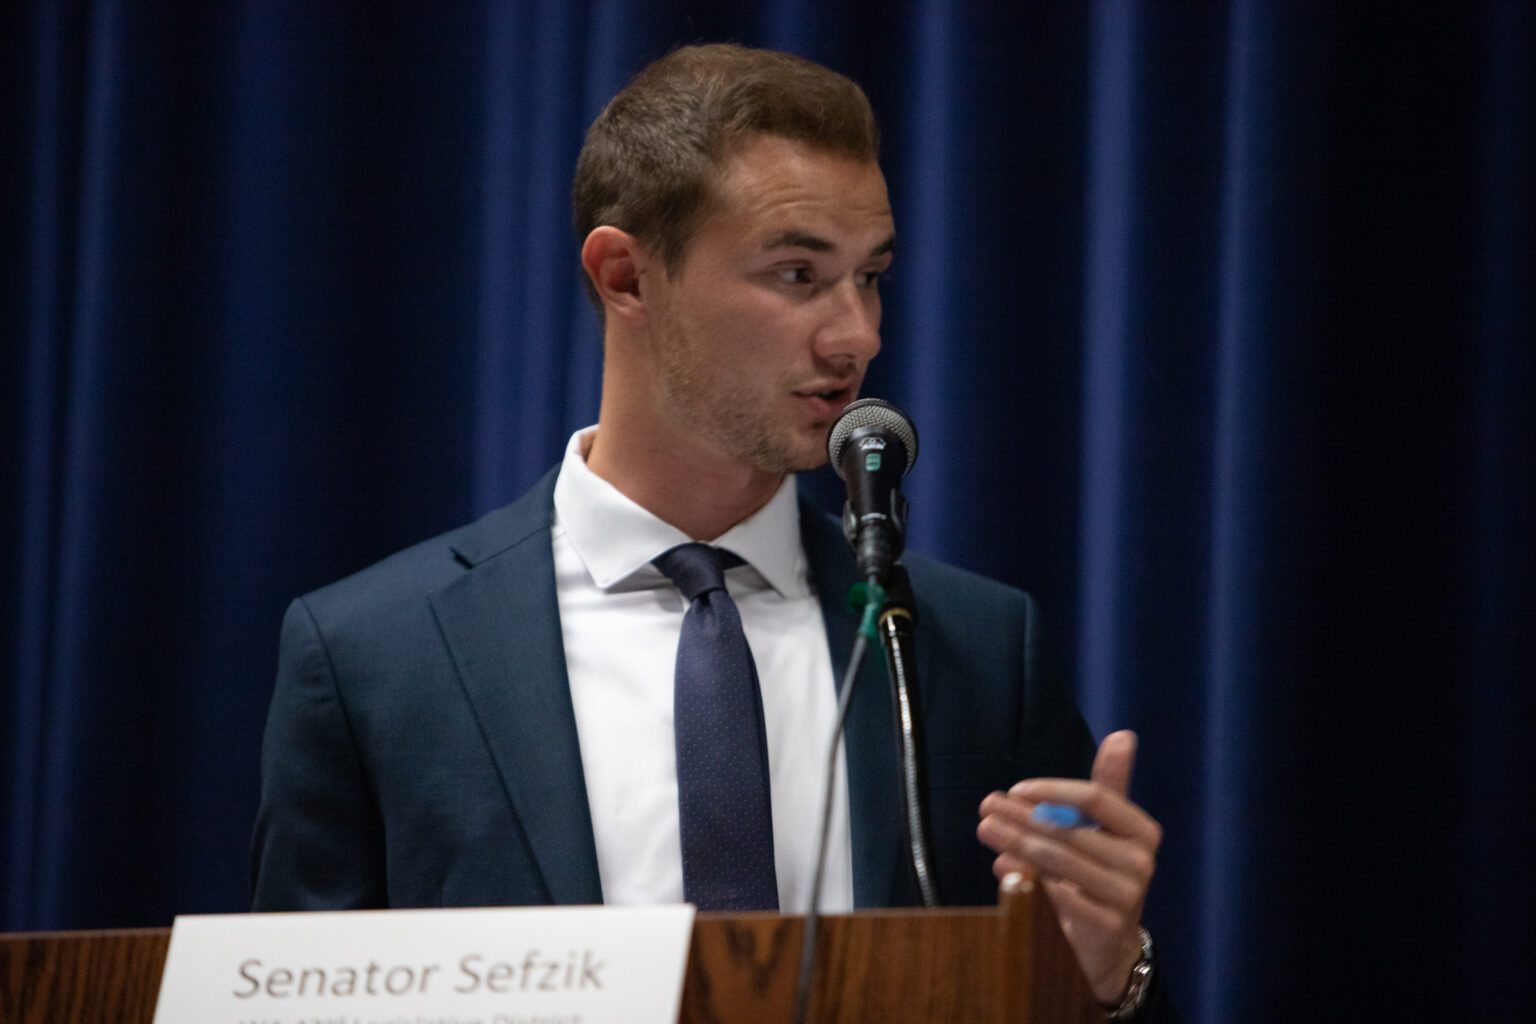 Sen. Simon Sefzik speaks through a microphone with a dark blue backdrop behind him.